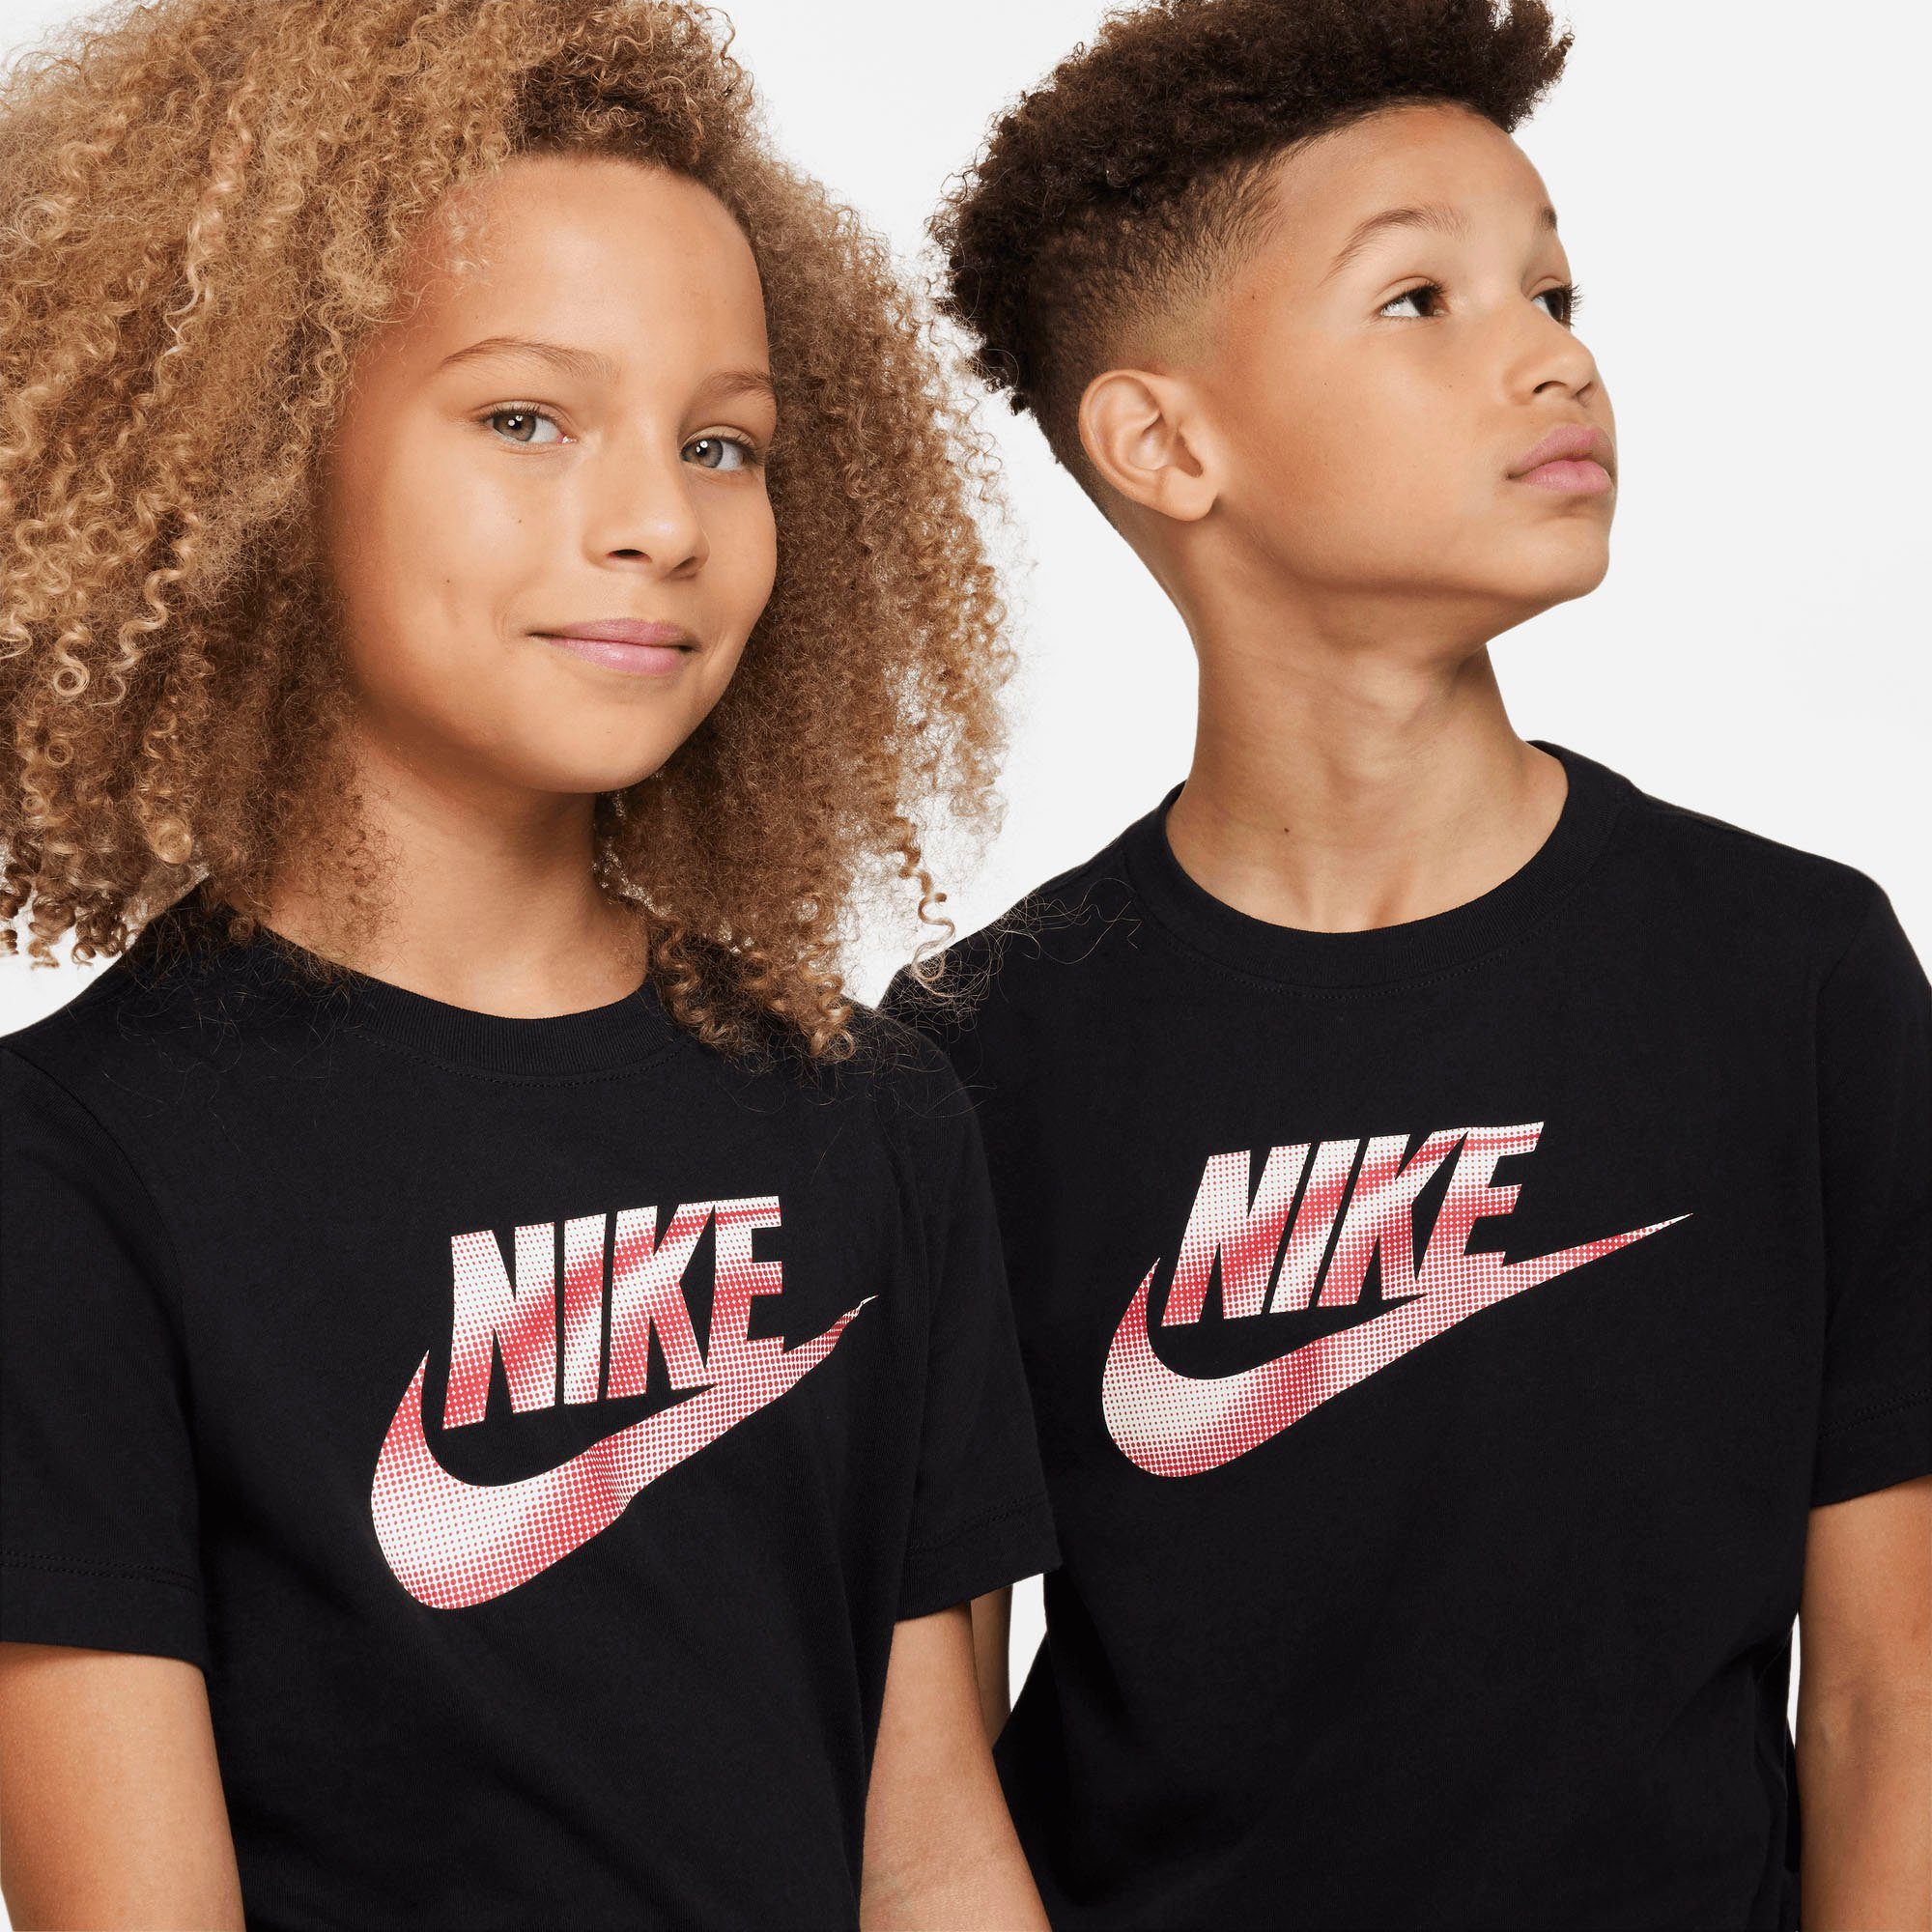 Nike Sportswear T-Shirt Kids' T-Shirt schwarz Big